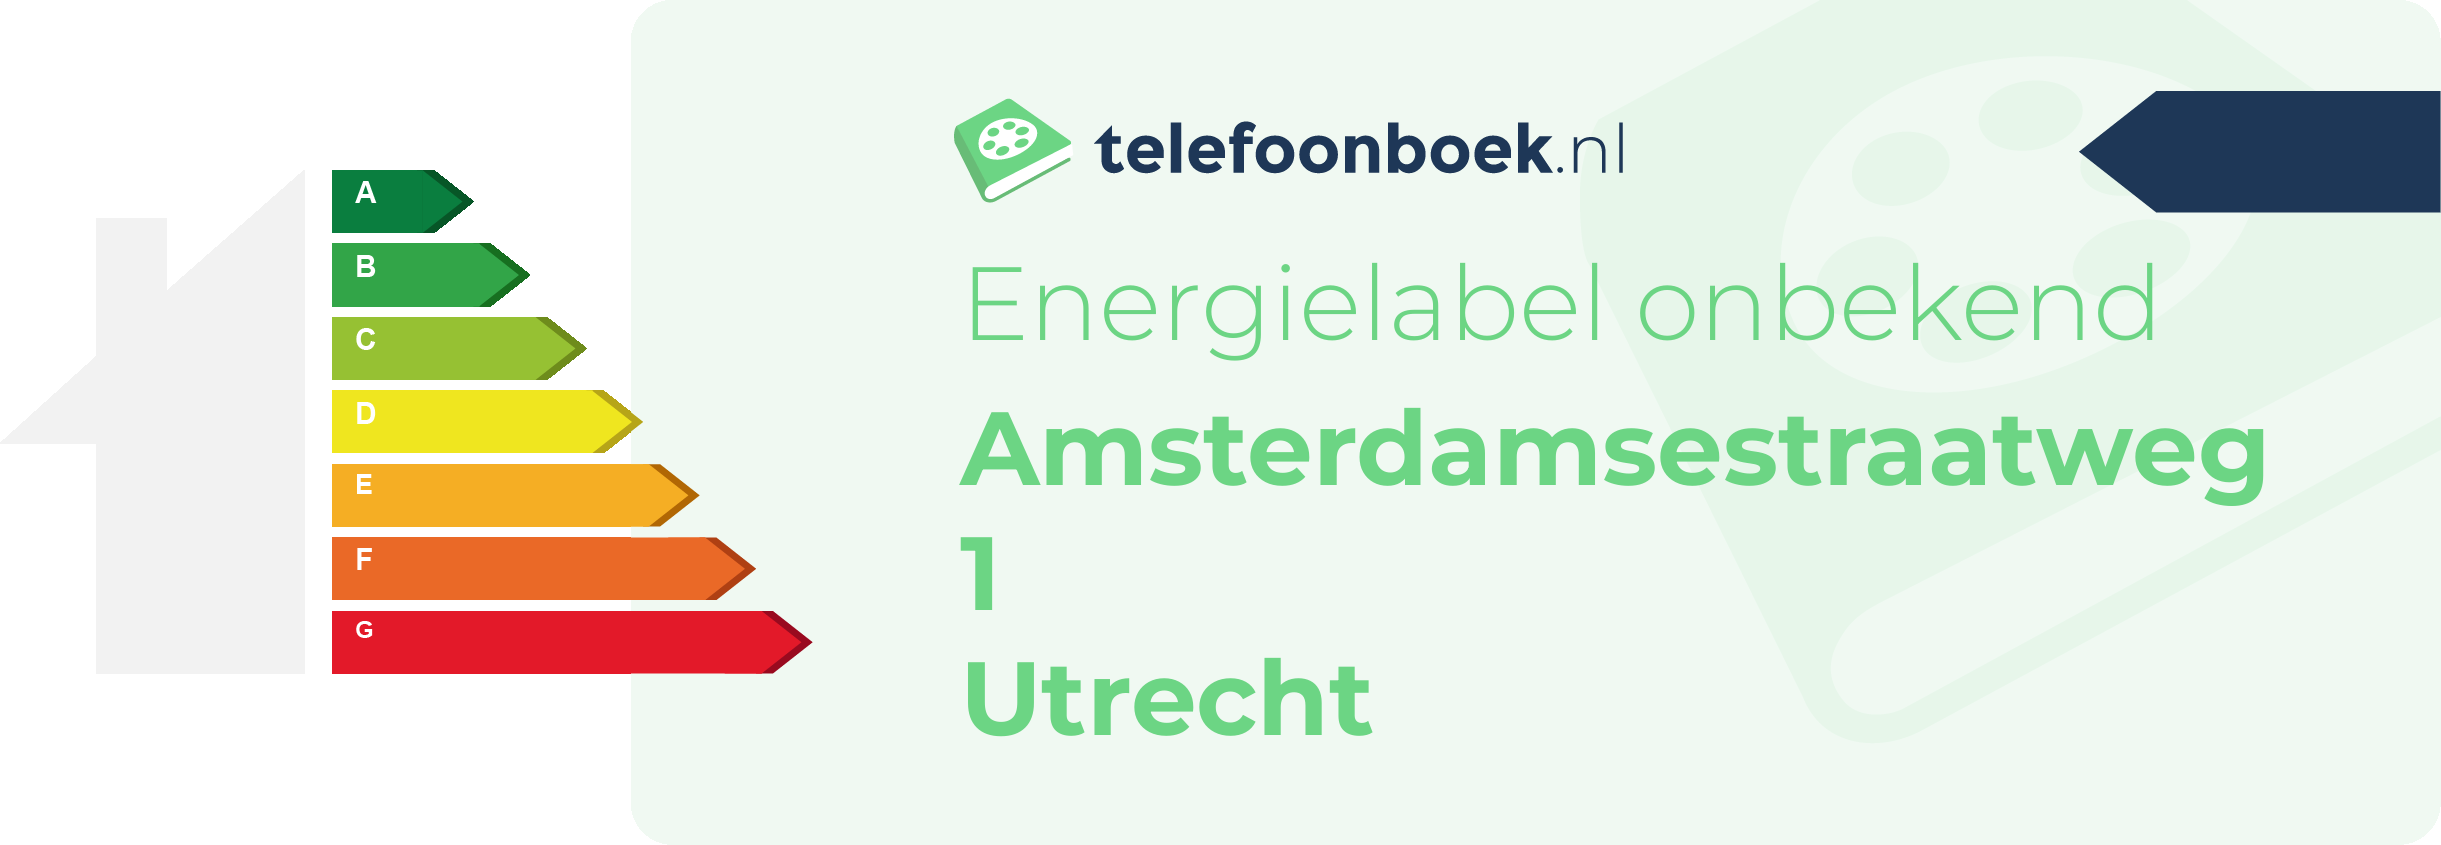 Energielabel Amsterdamsestraatweg 1 Utrecht